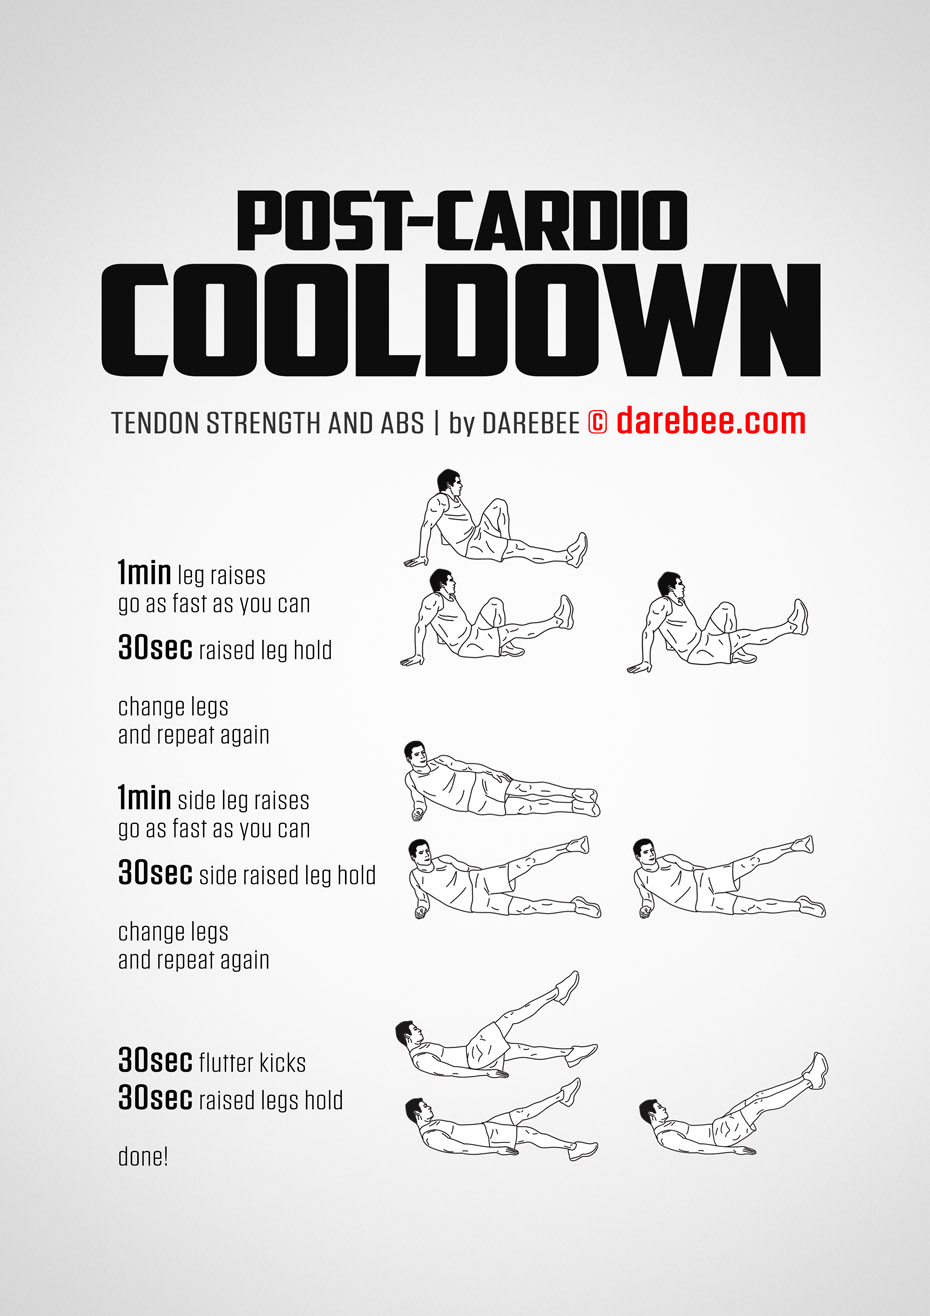 Post-Cardio Cooldown